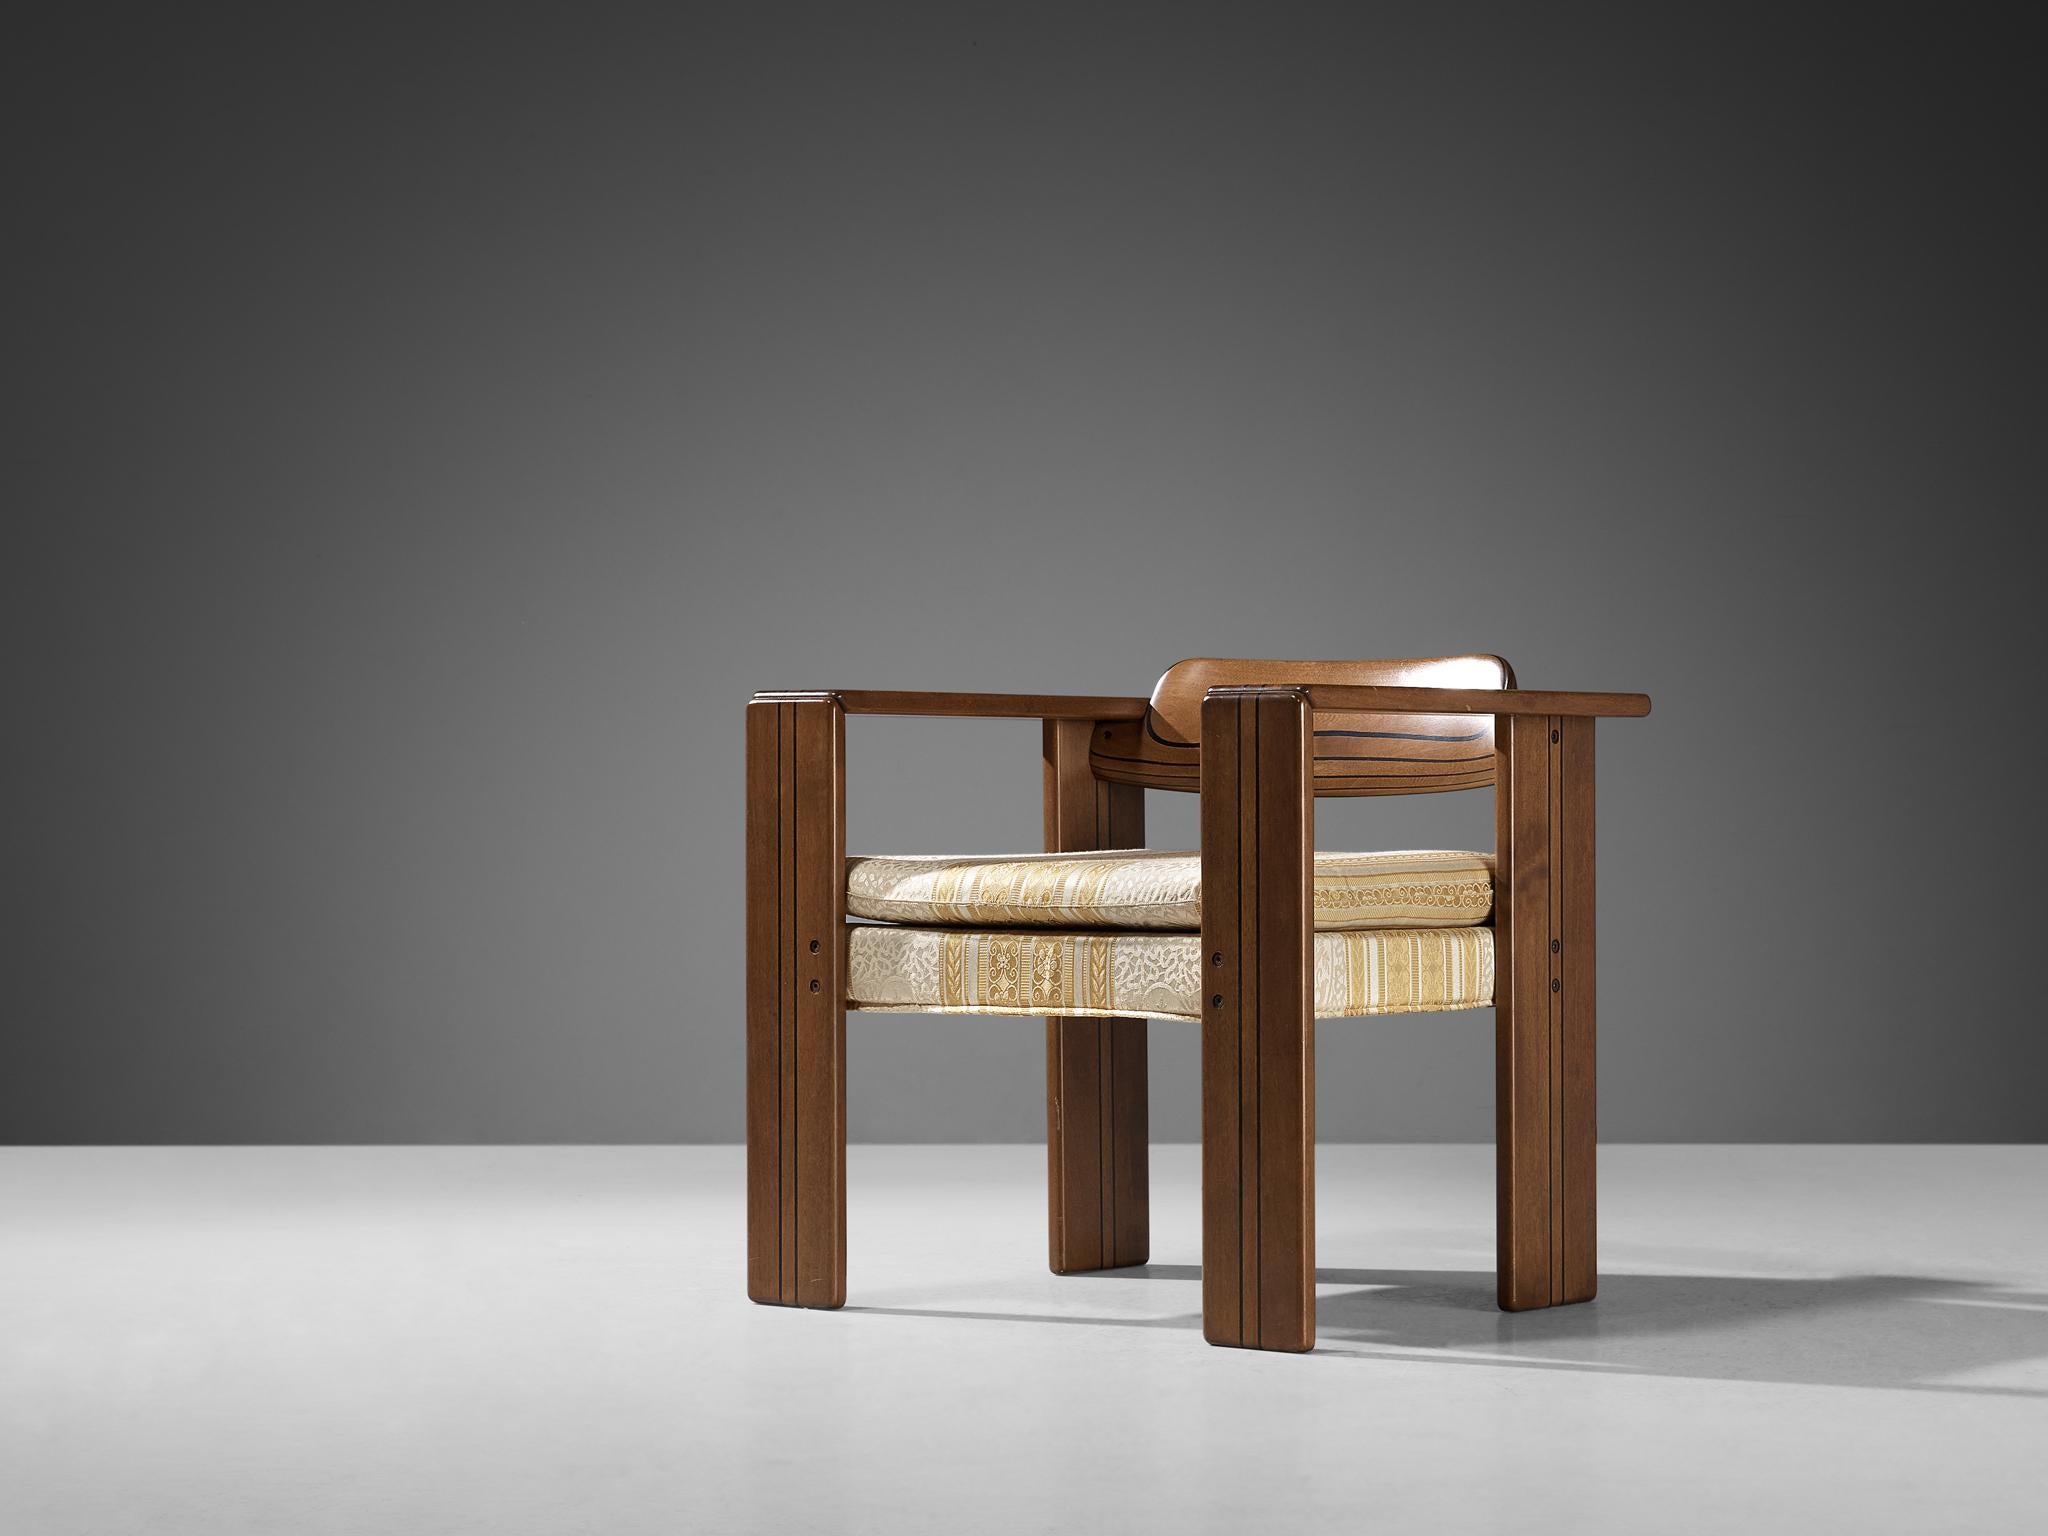 Fabric Afra & Tobia Scarpa 'Artona' Lounge Chair in Walnut and Yellow Upholstery